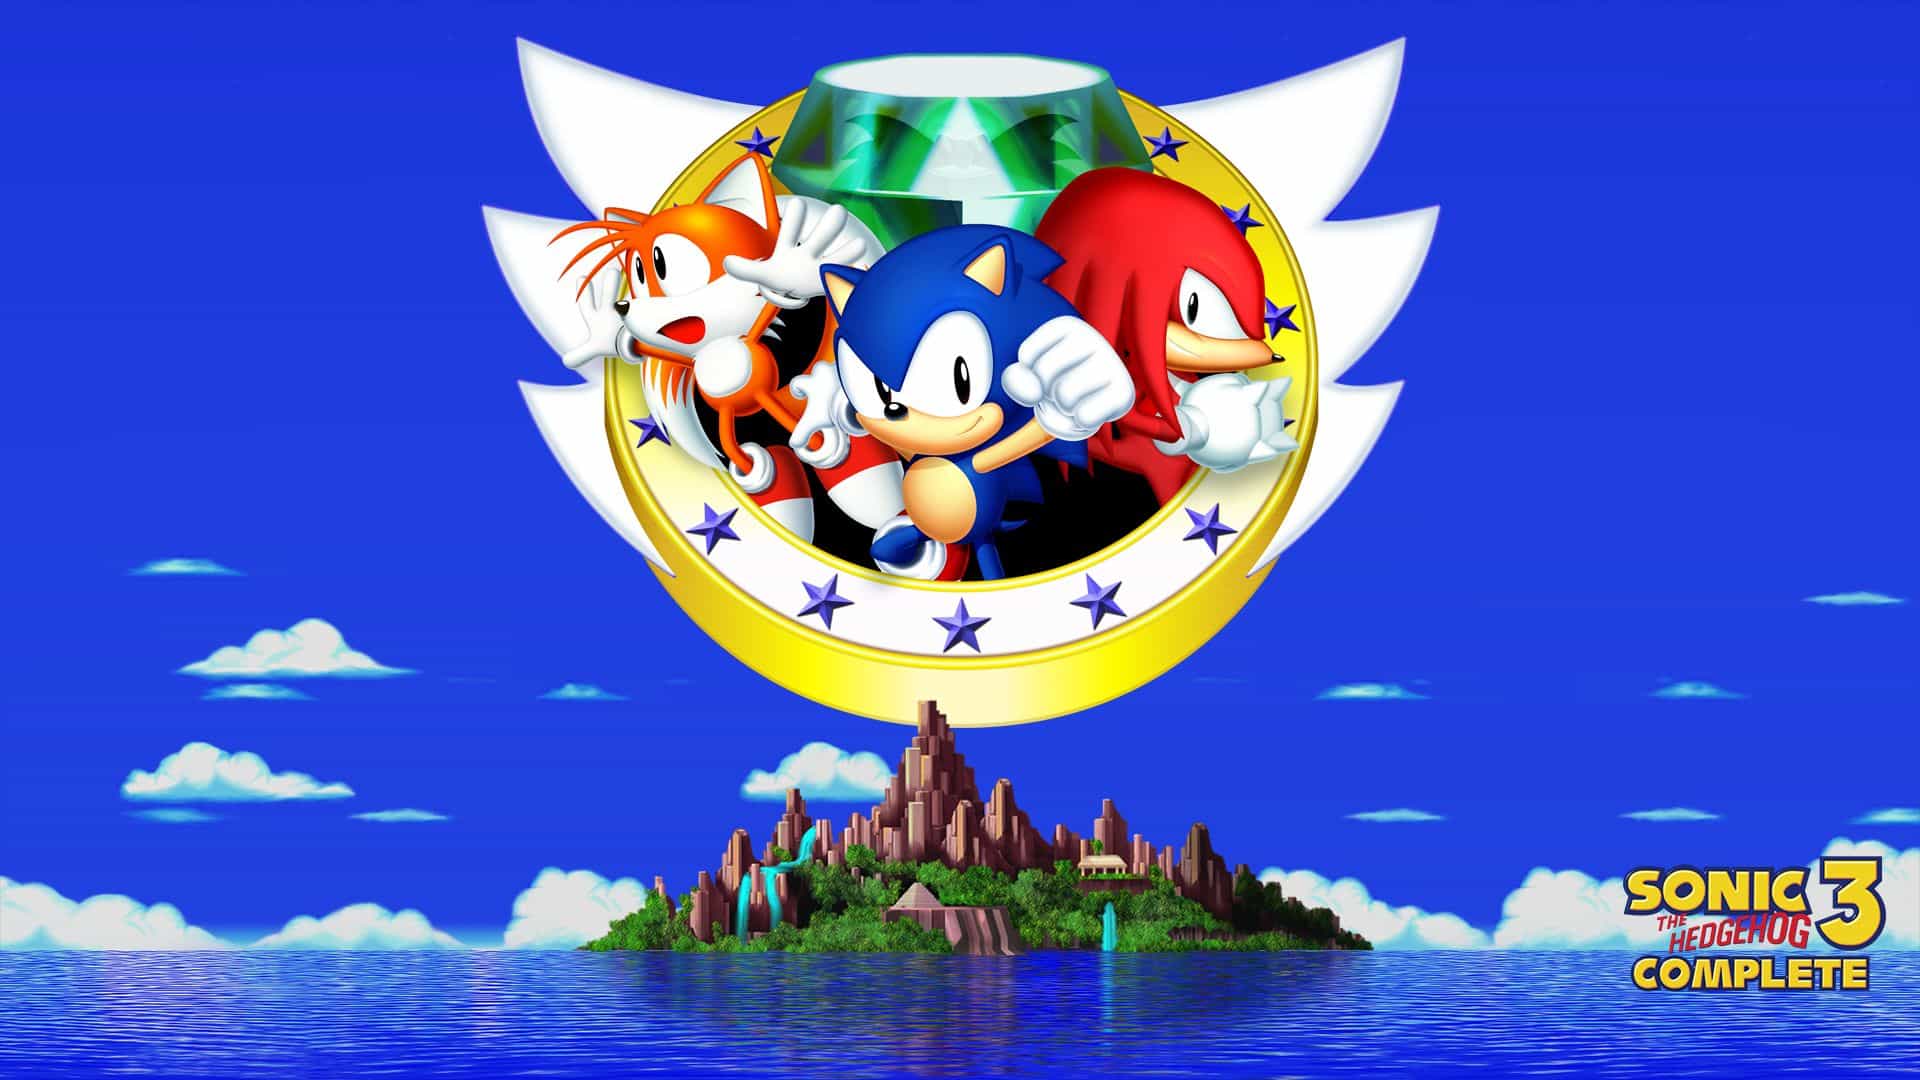 Sonic the Hedgehog 2 Wallpaper. Mario Sonic Wallpaper, Panasonic Wallpaper and Sonic Toy Story Wallpaper